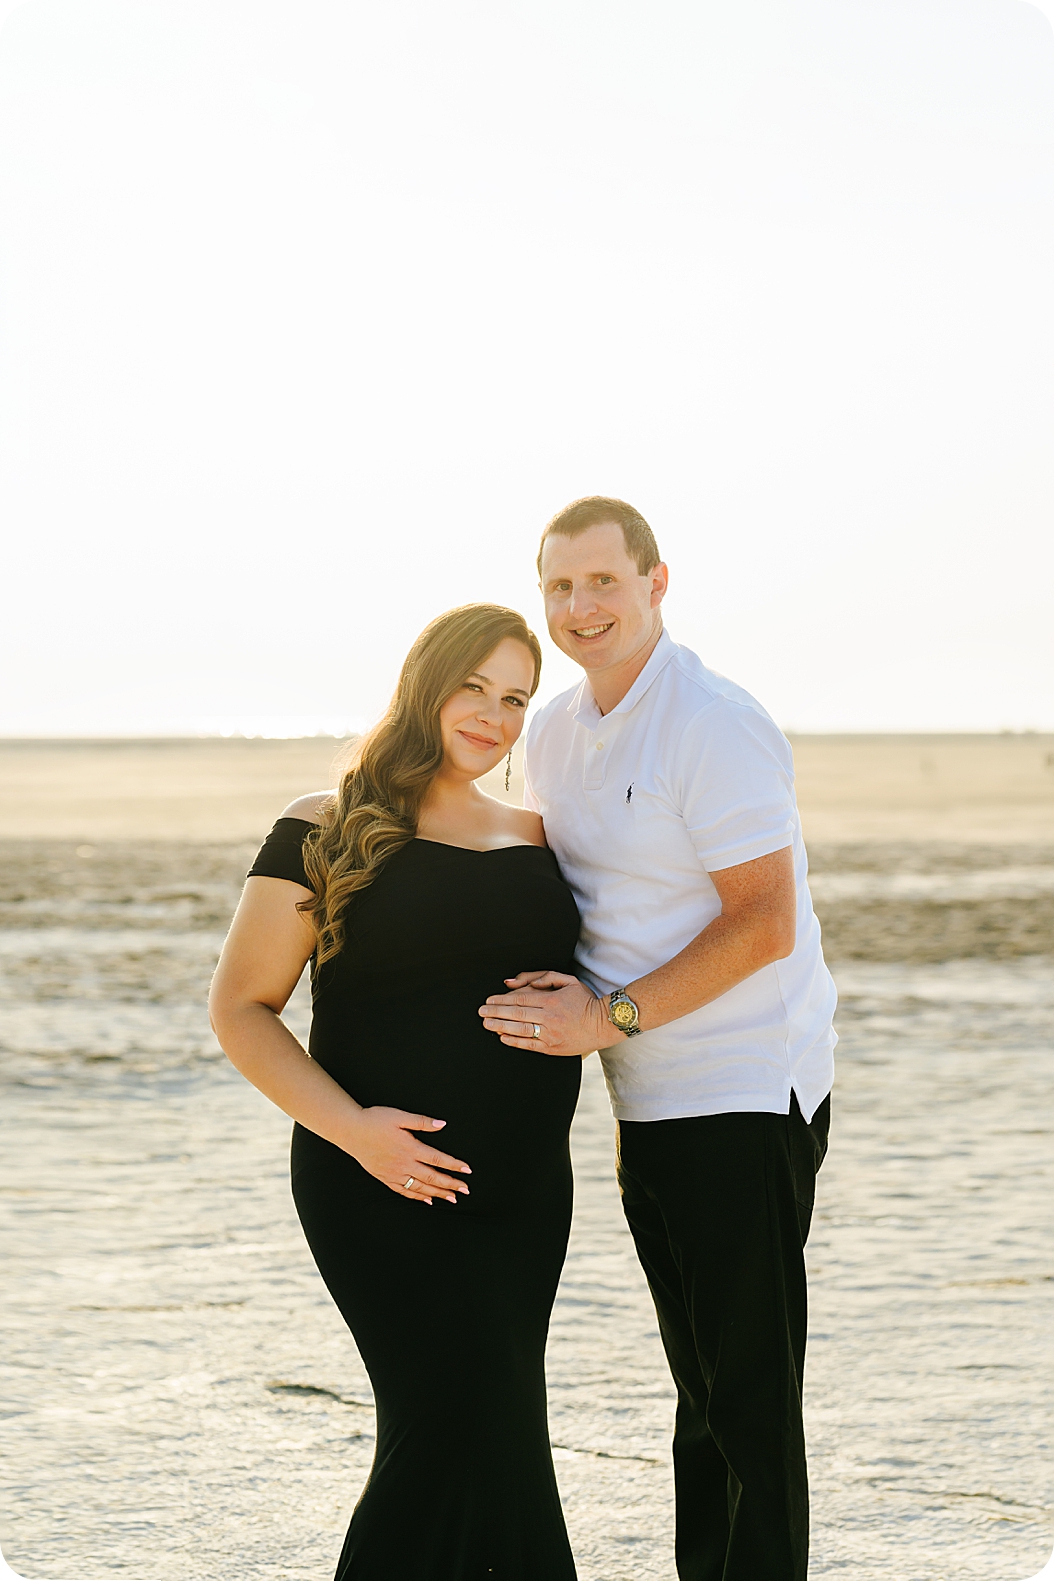 new parents pose in lake bed during Utah maternity photos